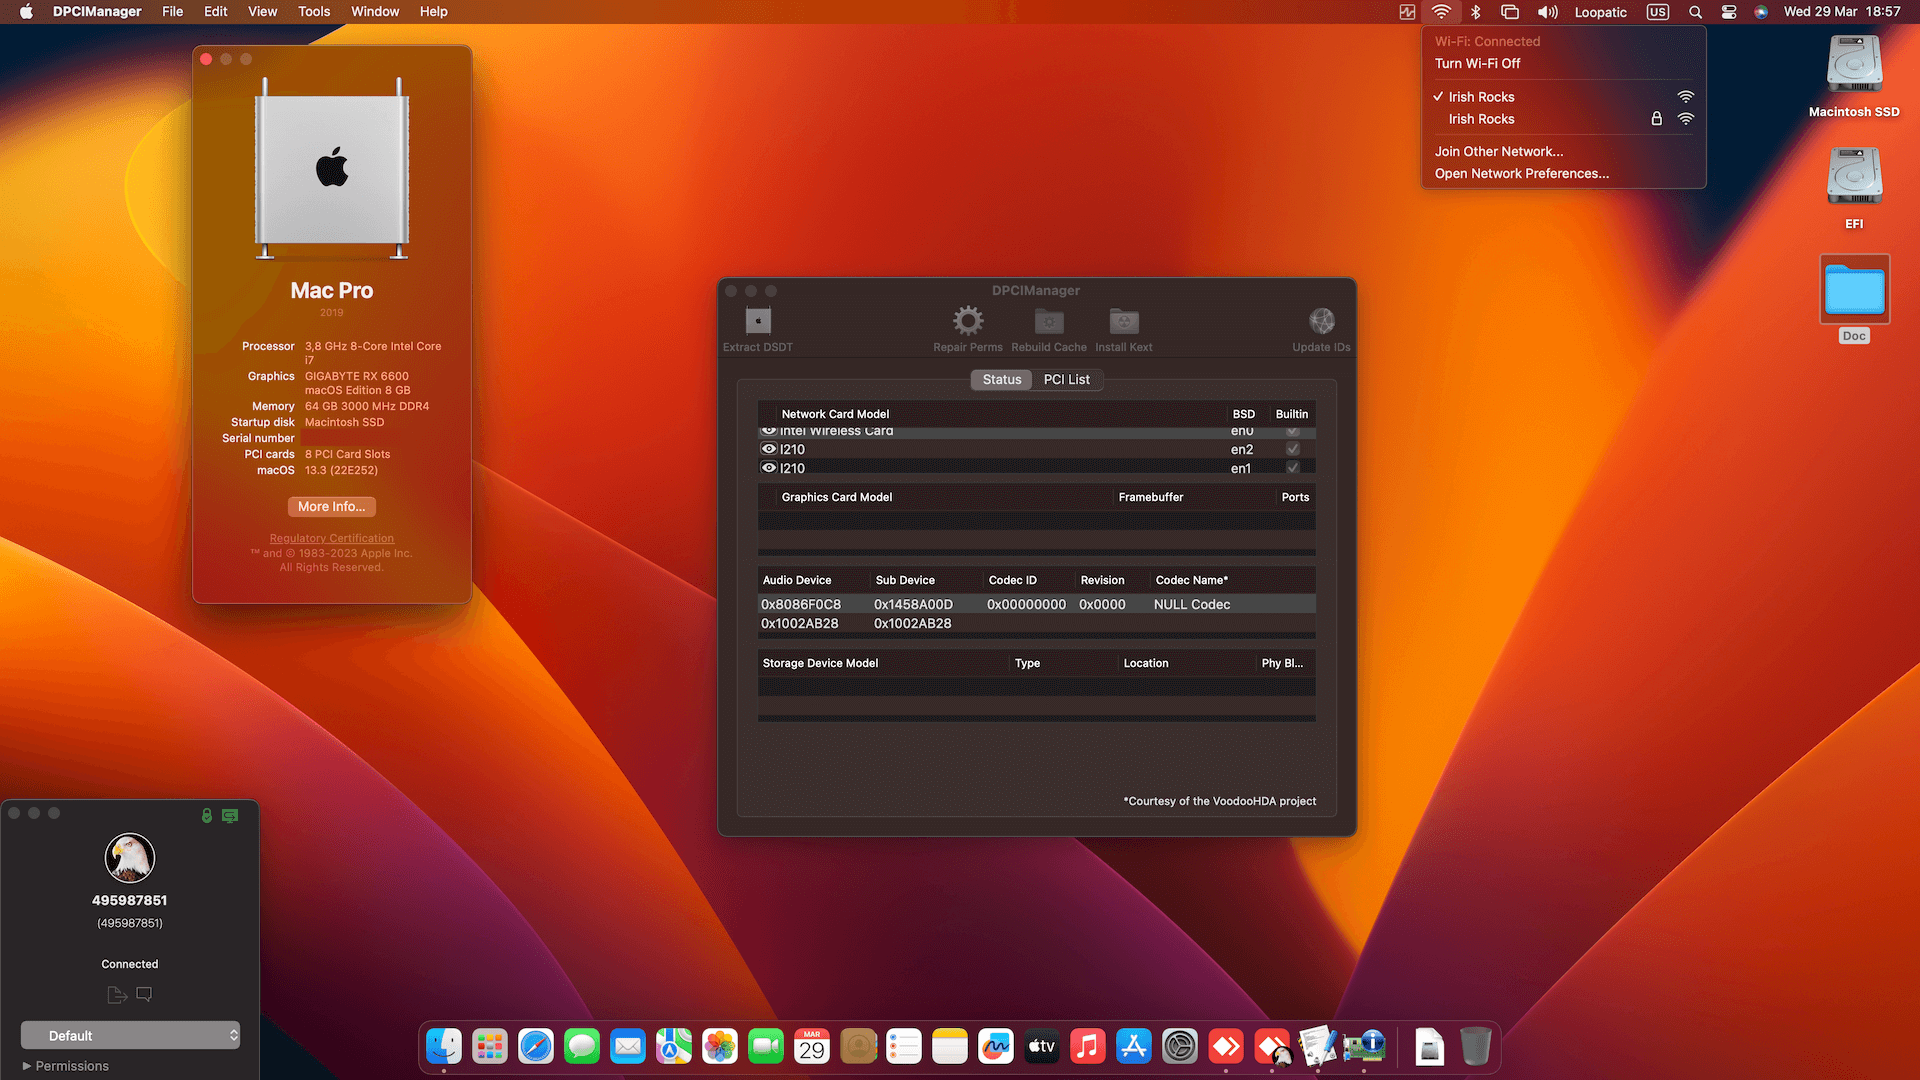 Success Hackintosh macOS Ventura 13.3 Build 22E252 in Gigabyte Z590 Vision D + Intel Core i7 10700K + Gigabyte RX 6600